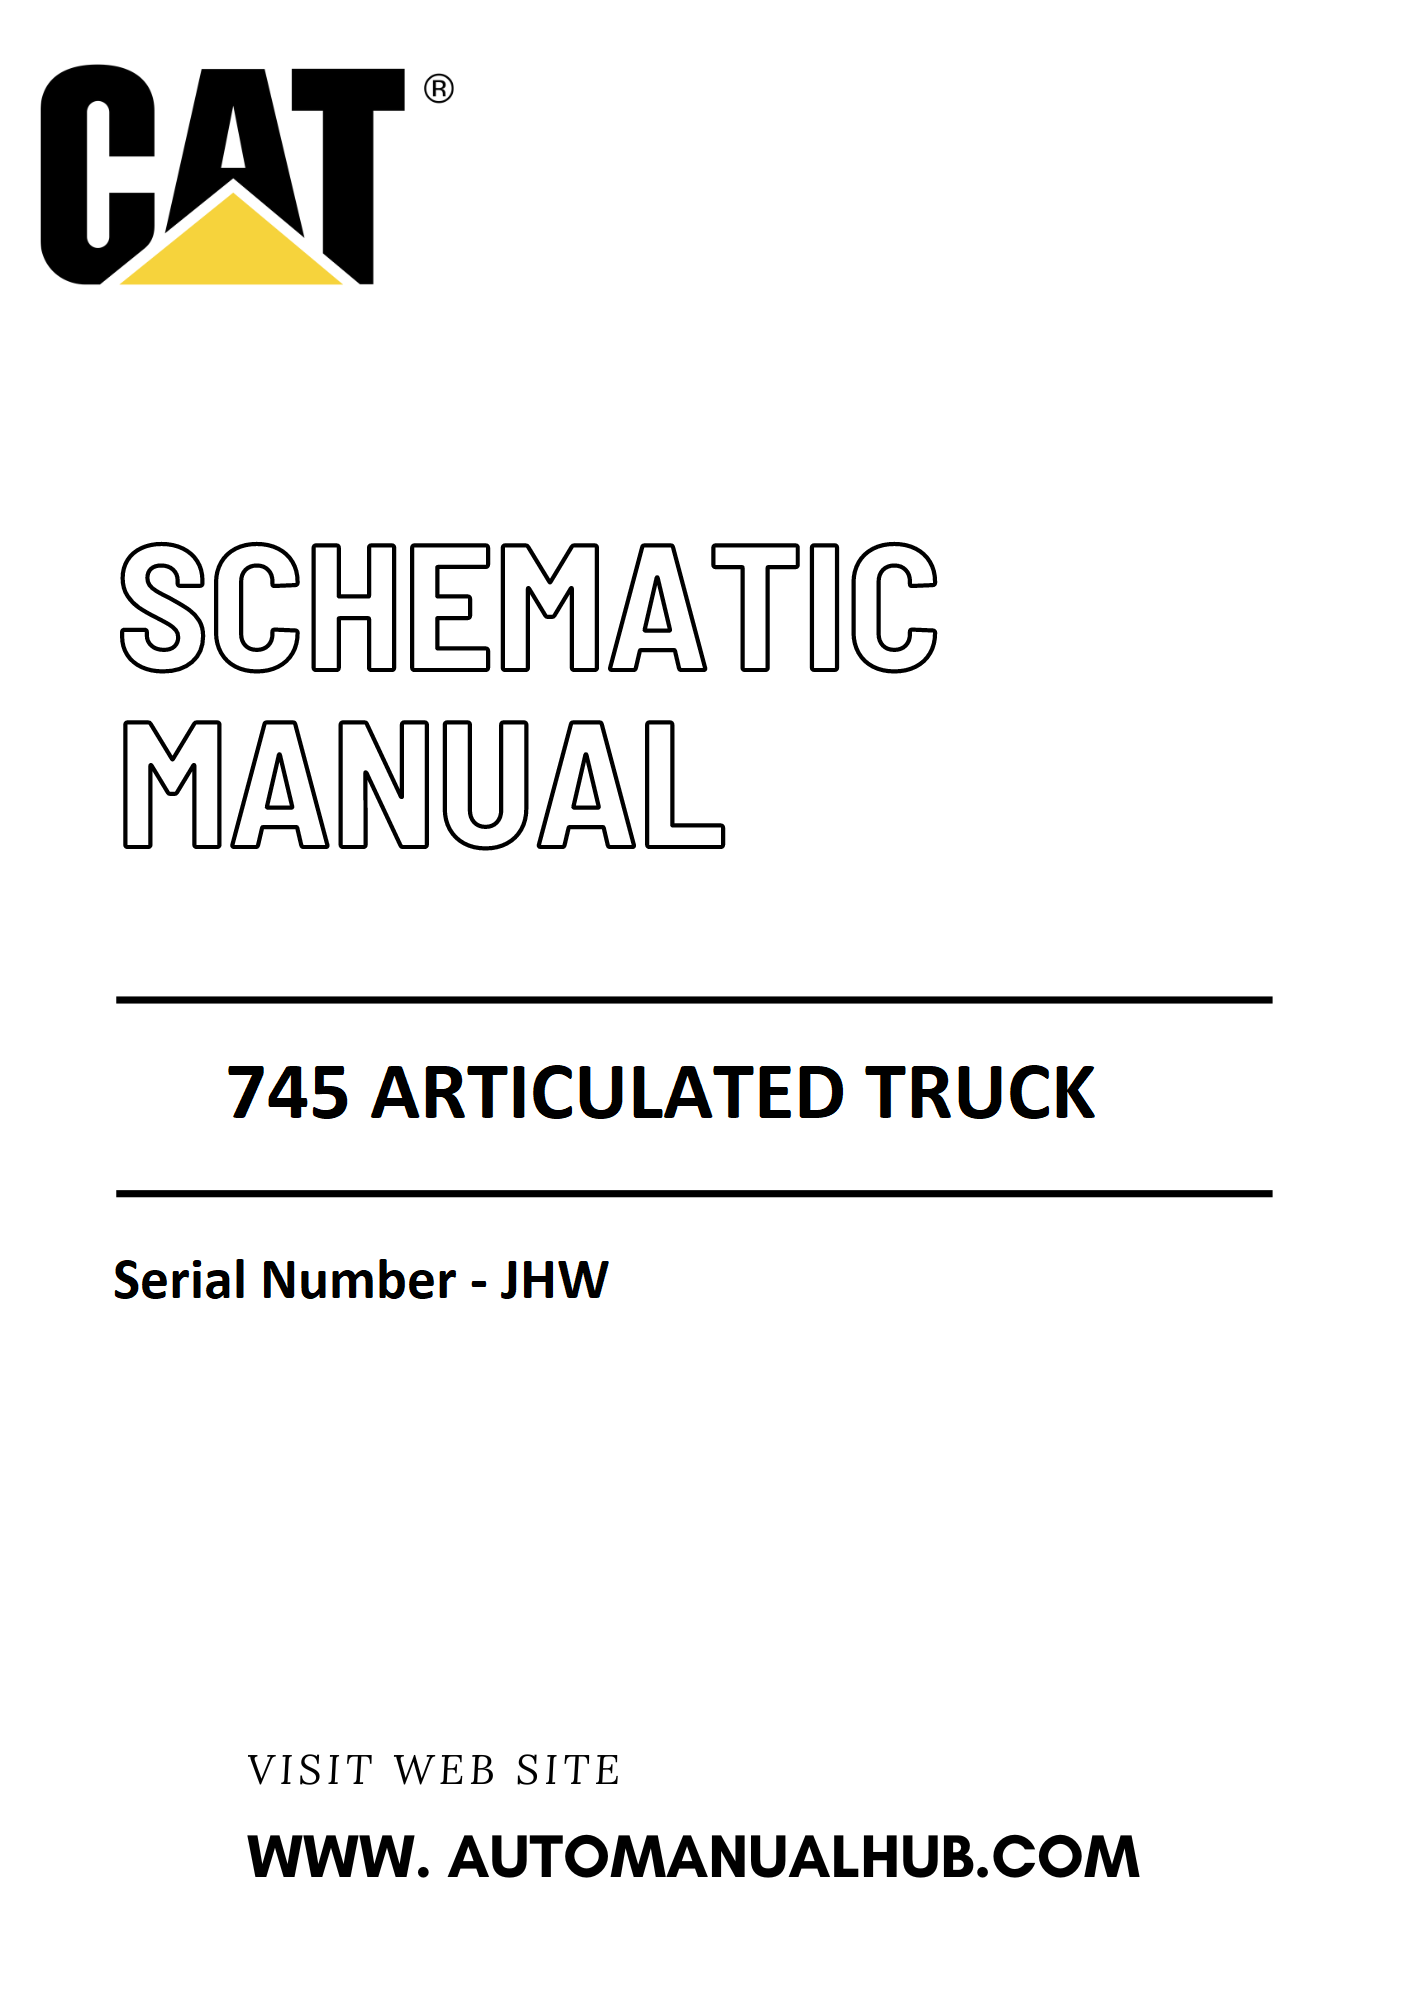 Cat Caterpillar 745 Articulated Truck Schematic Diagram Manual Serial Number - JHW PDF Download